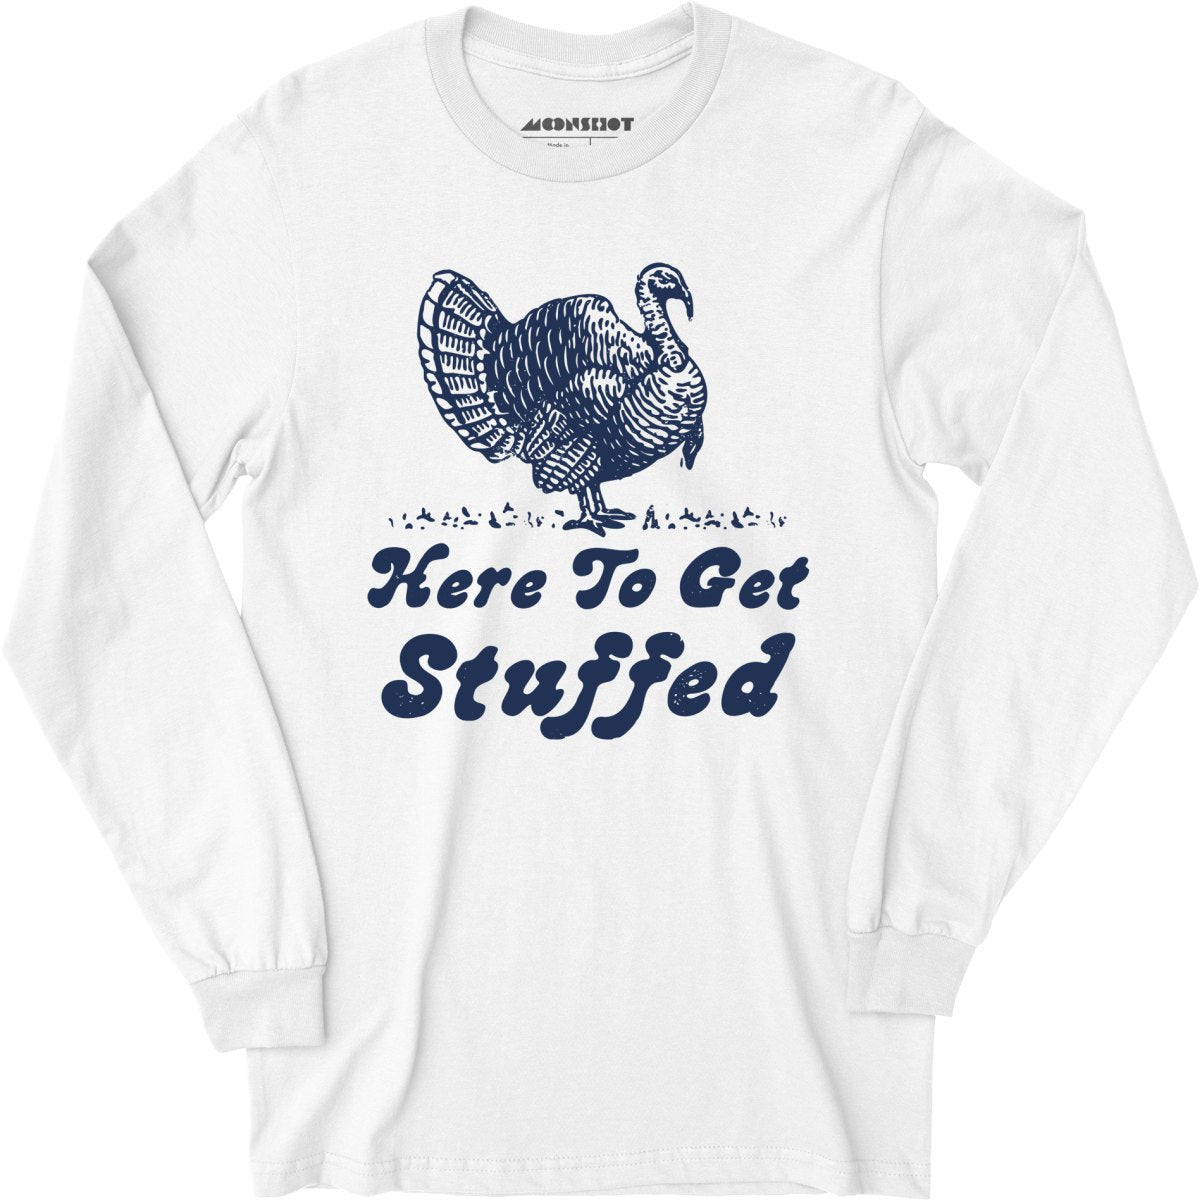 Here to Get Stuffed - Long Sleeve T-Shirt